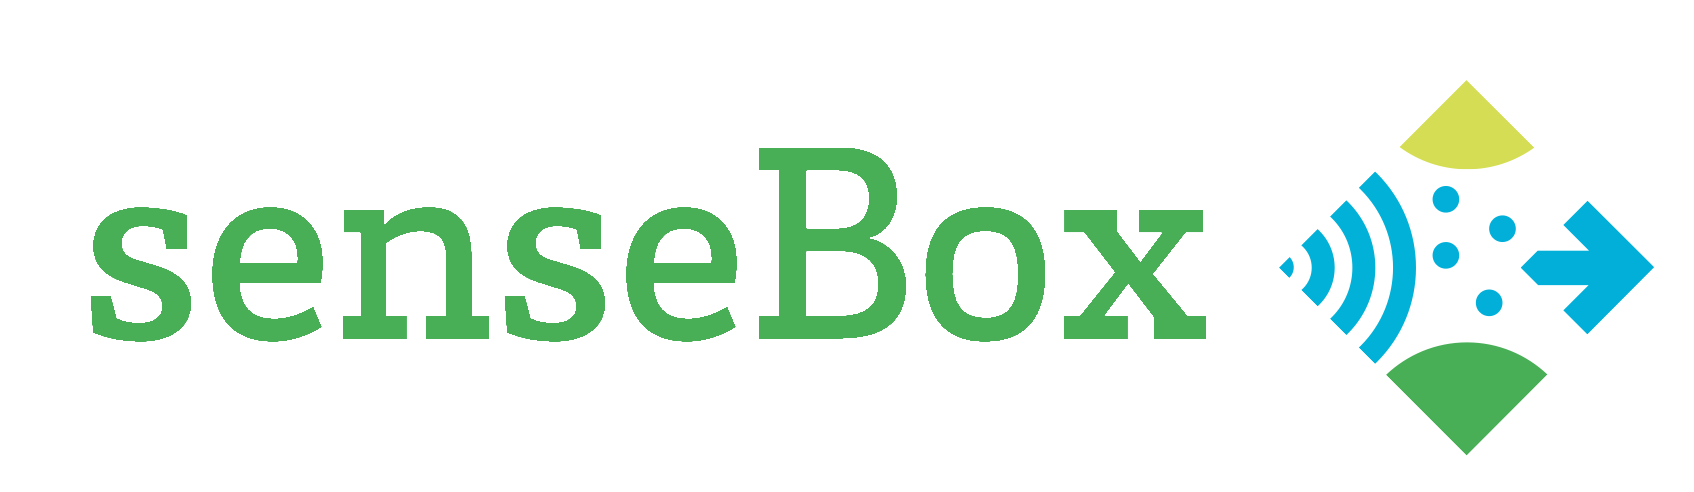 Der senseBox-Frühlingsnewsletter 2019 - Logo